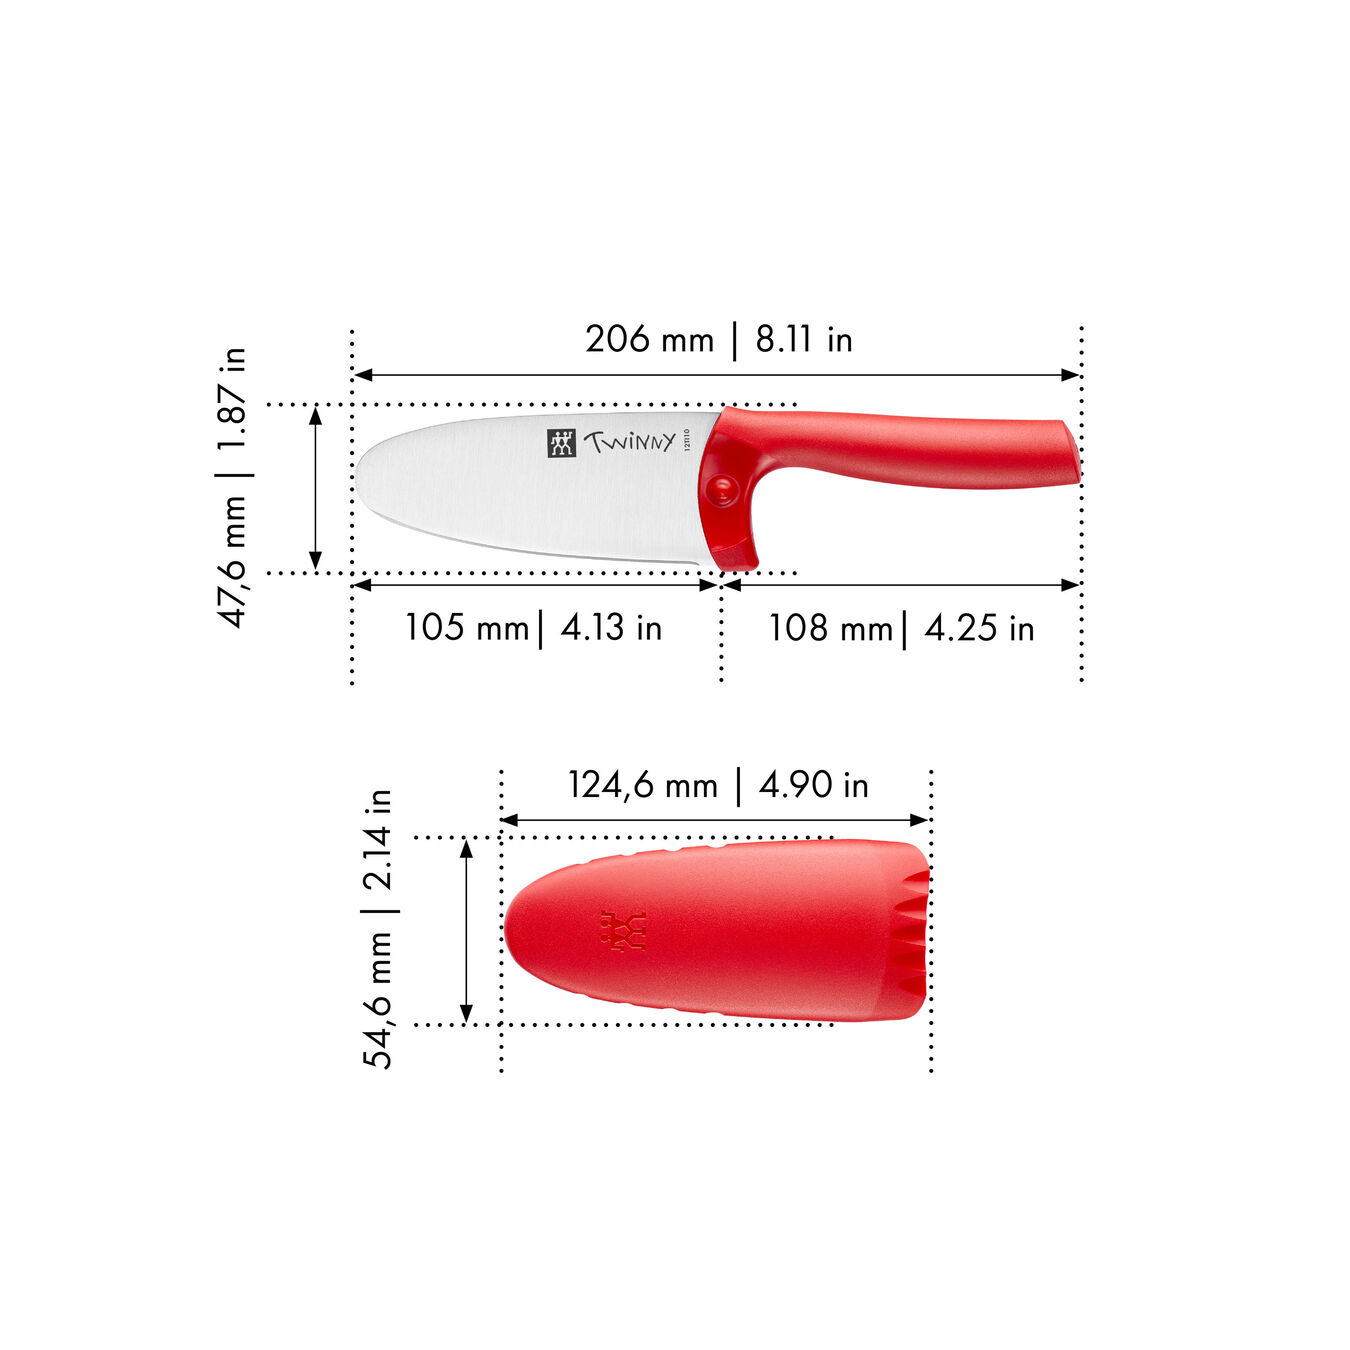 ZWILLING TWINNY Kinderkochmesser 10 cm, Rot,,large 4